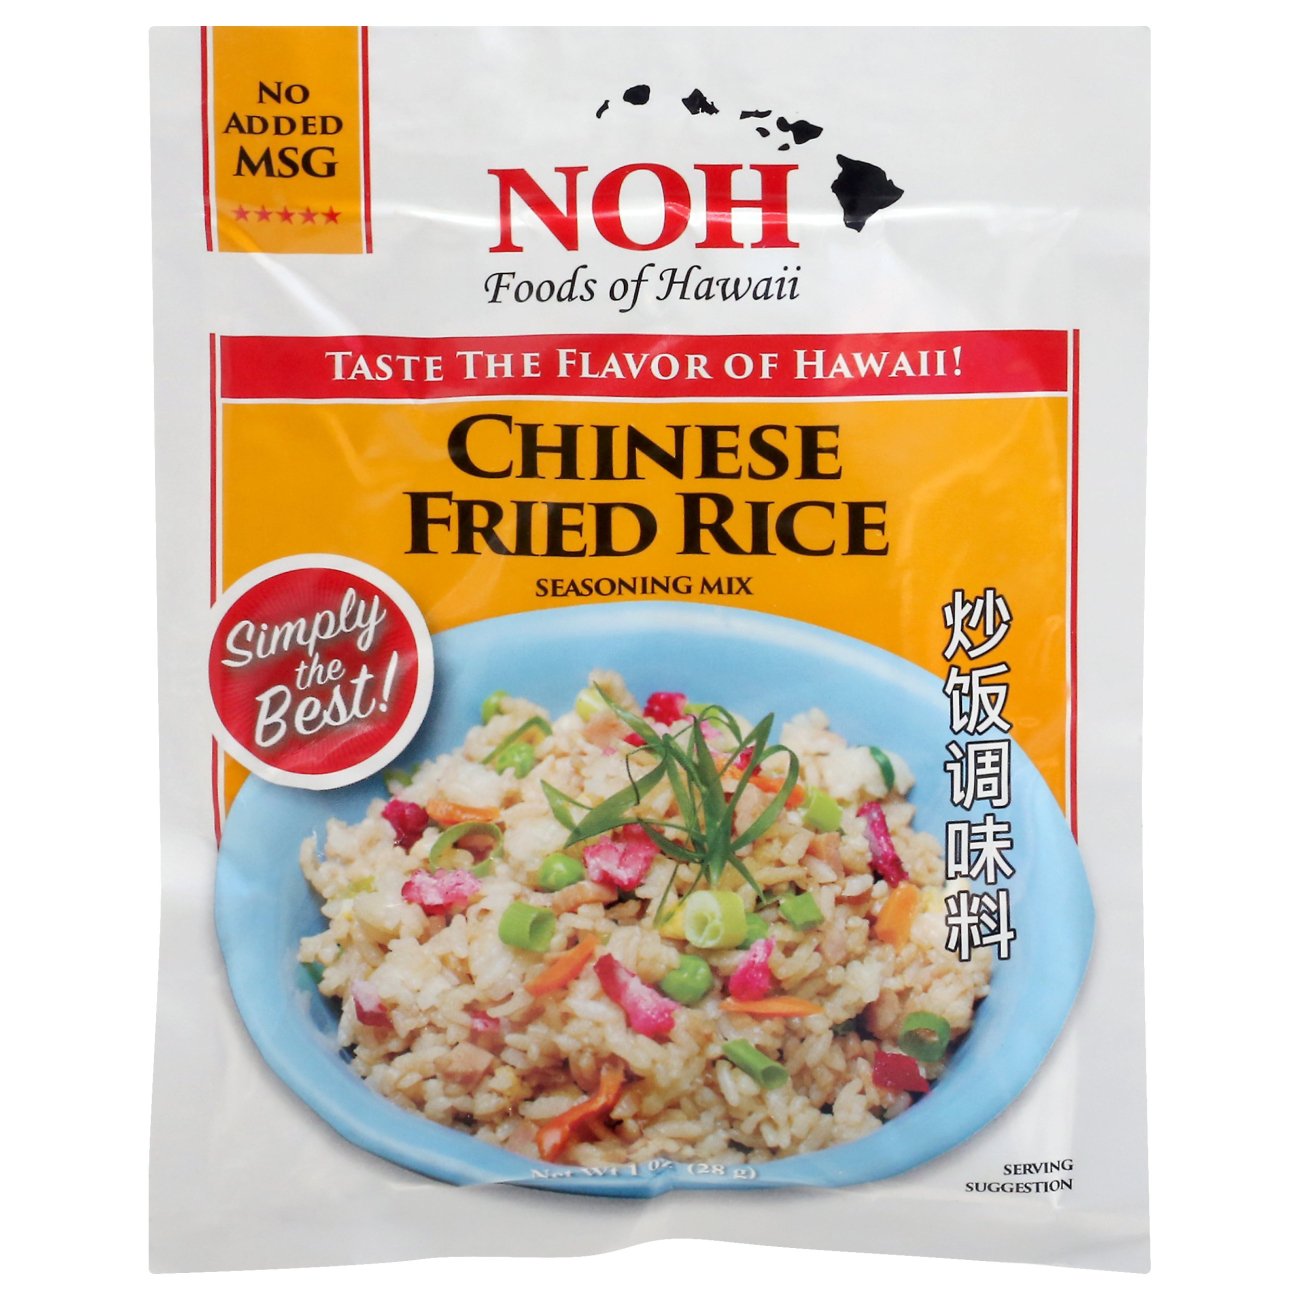 NOH of Hawaii Chinese Fried Rice Seasoning Mix